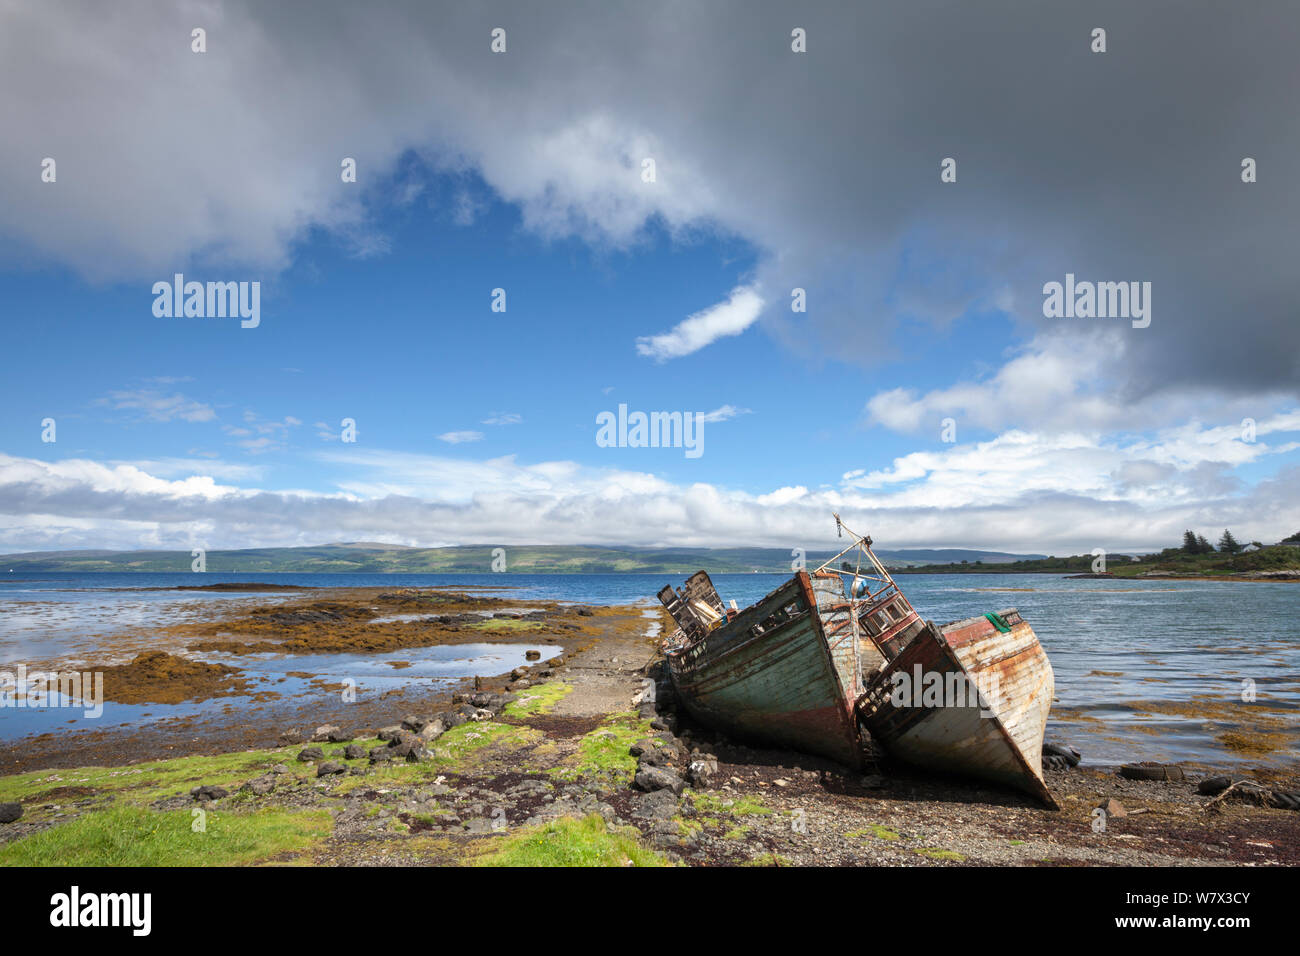 Abandoned fishing boats on beach, Salen, Isle of Mull, Scotland, UK. June 2013. Stock Photo